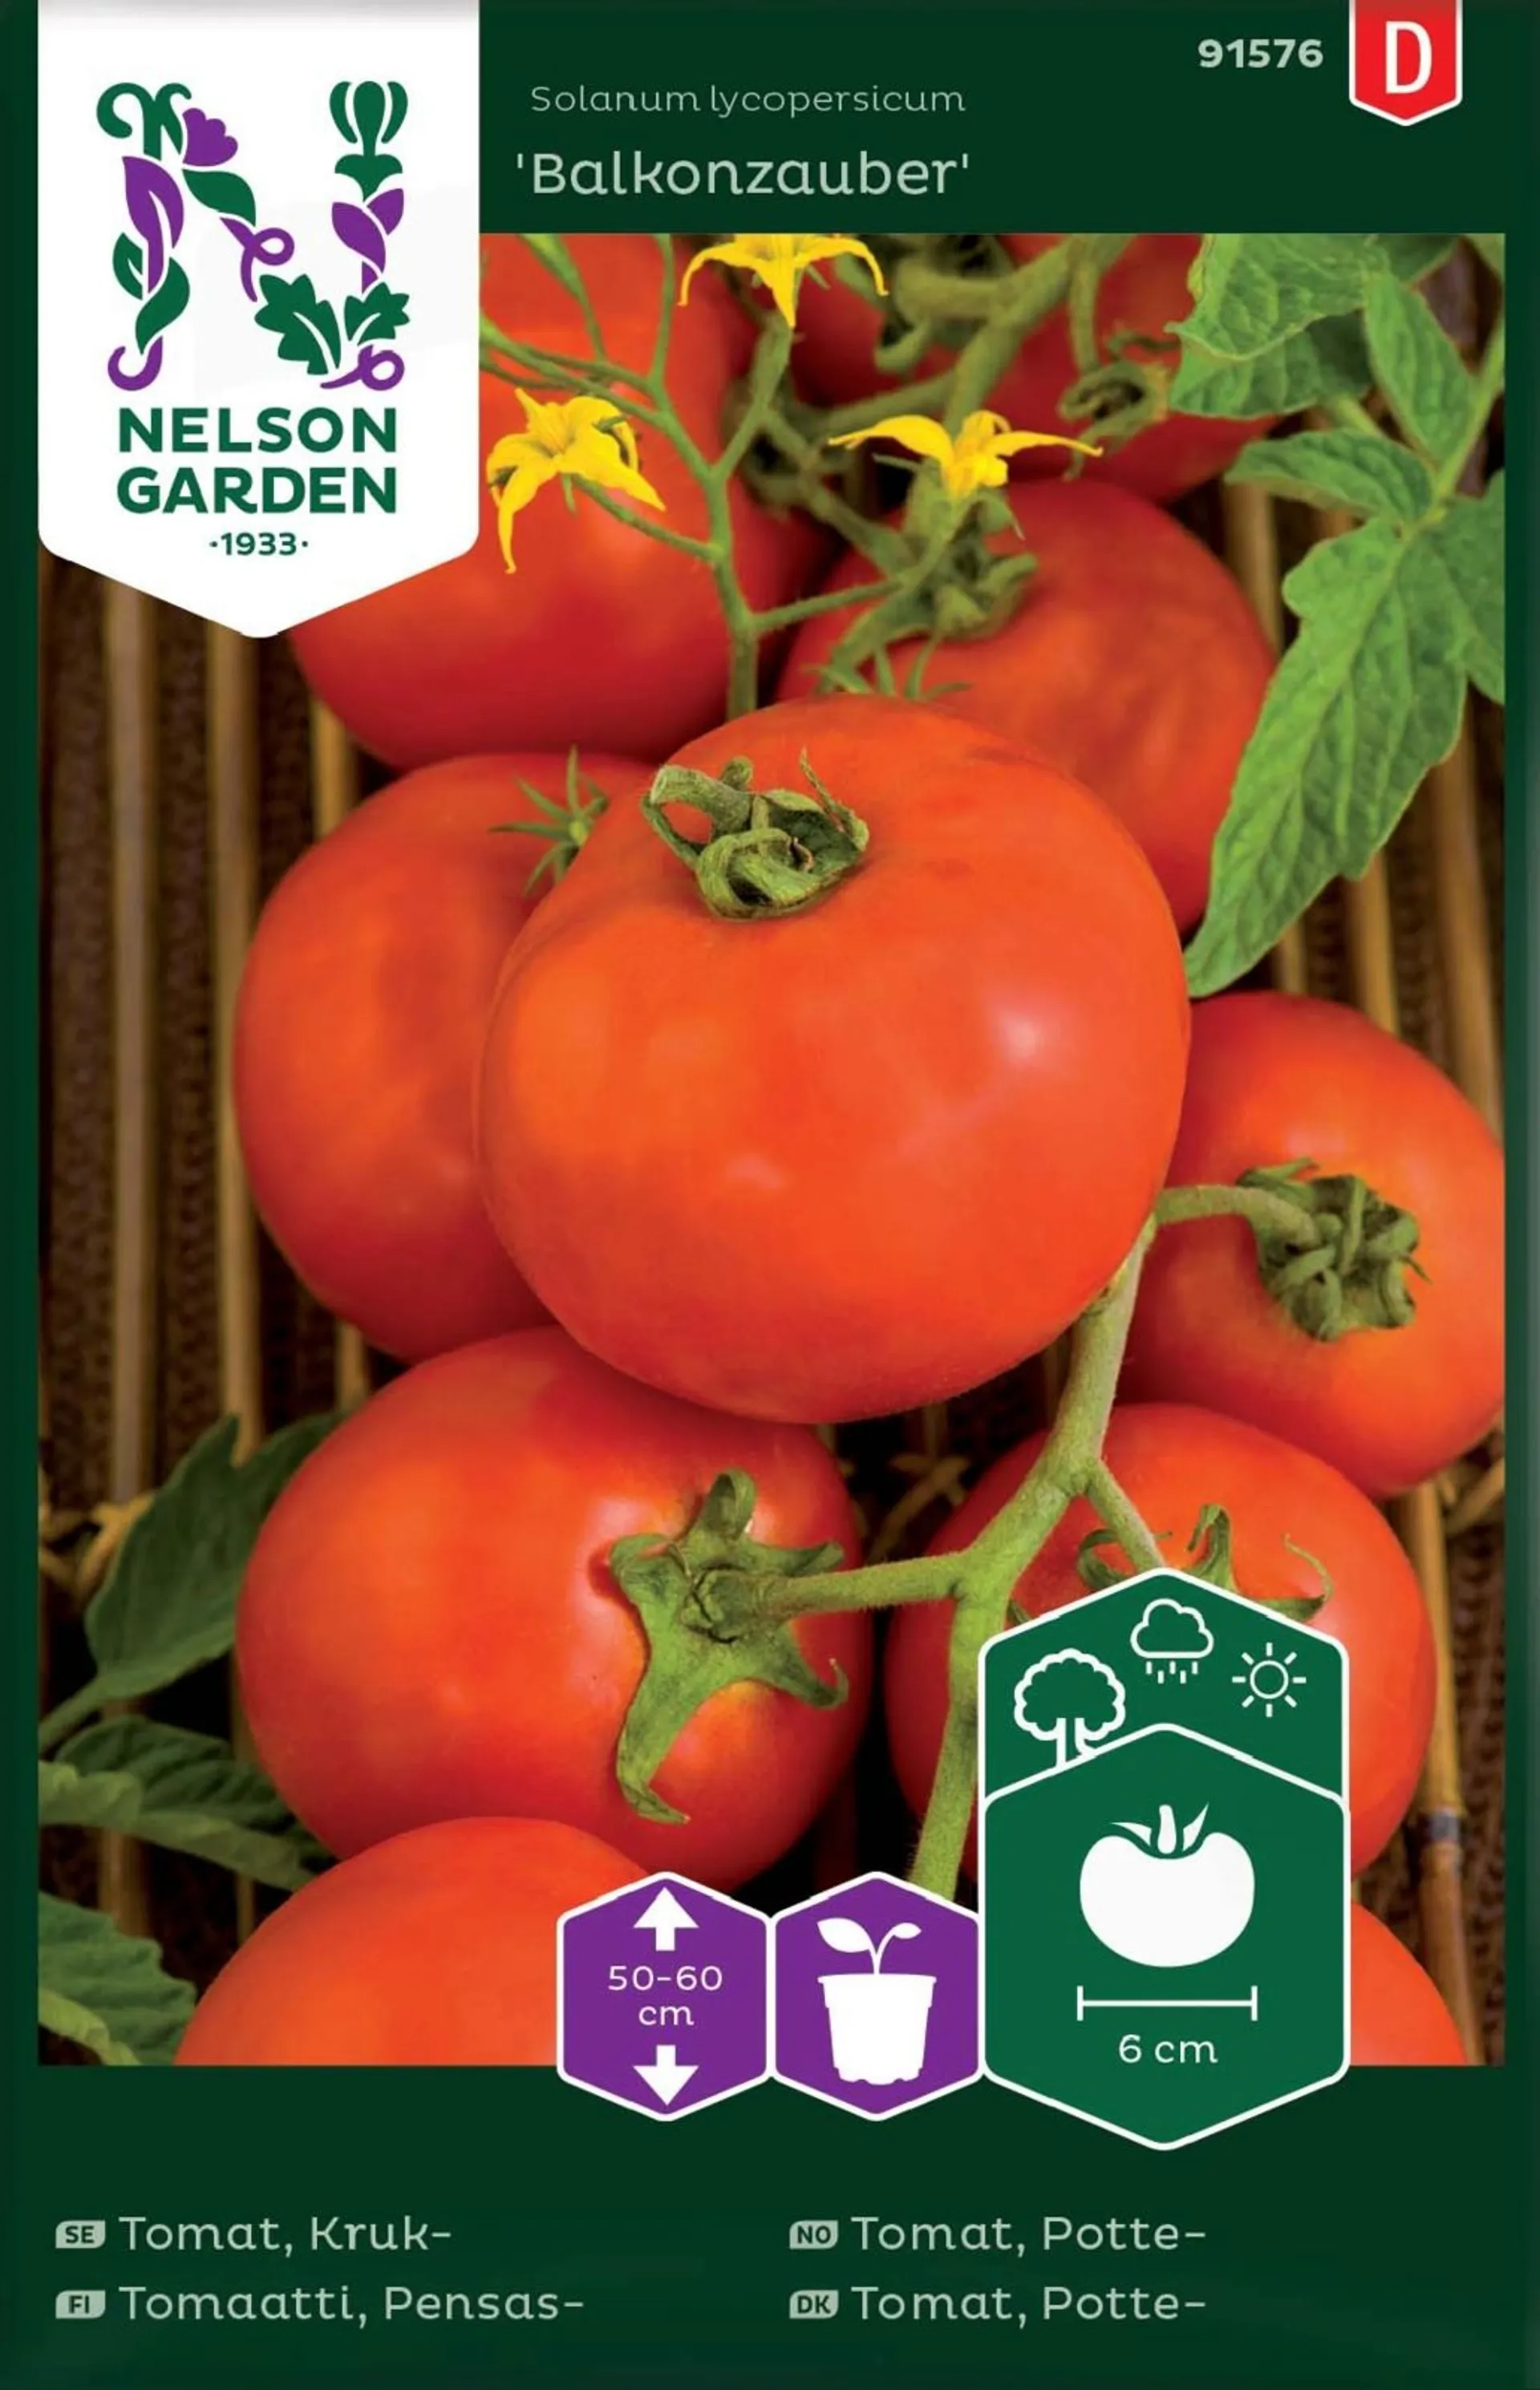 Nelson Garden Siemen Tomaatti, Pensas-, Balkonzauber